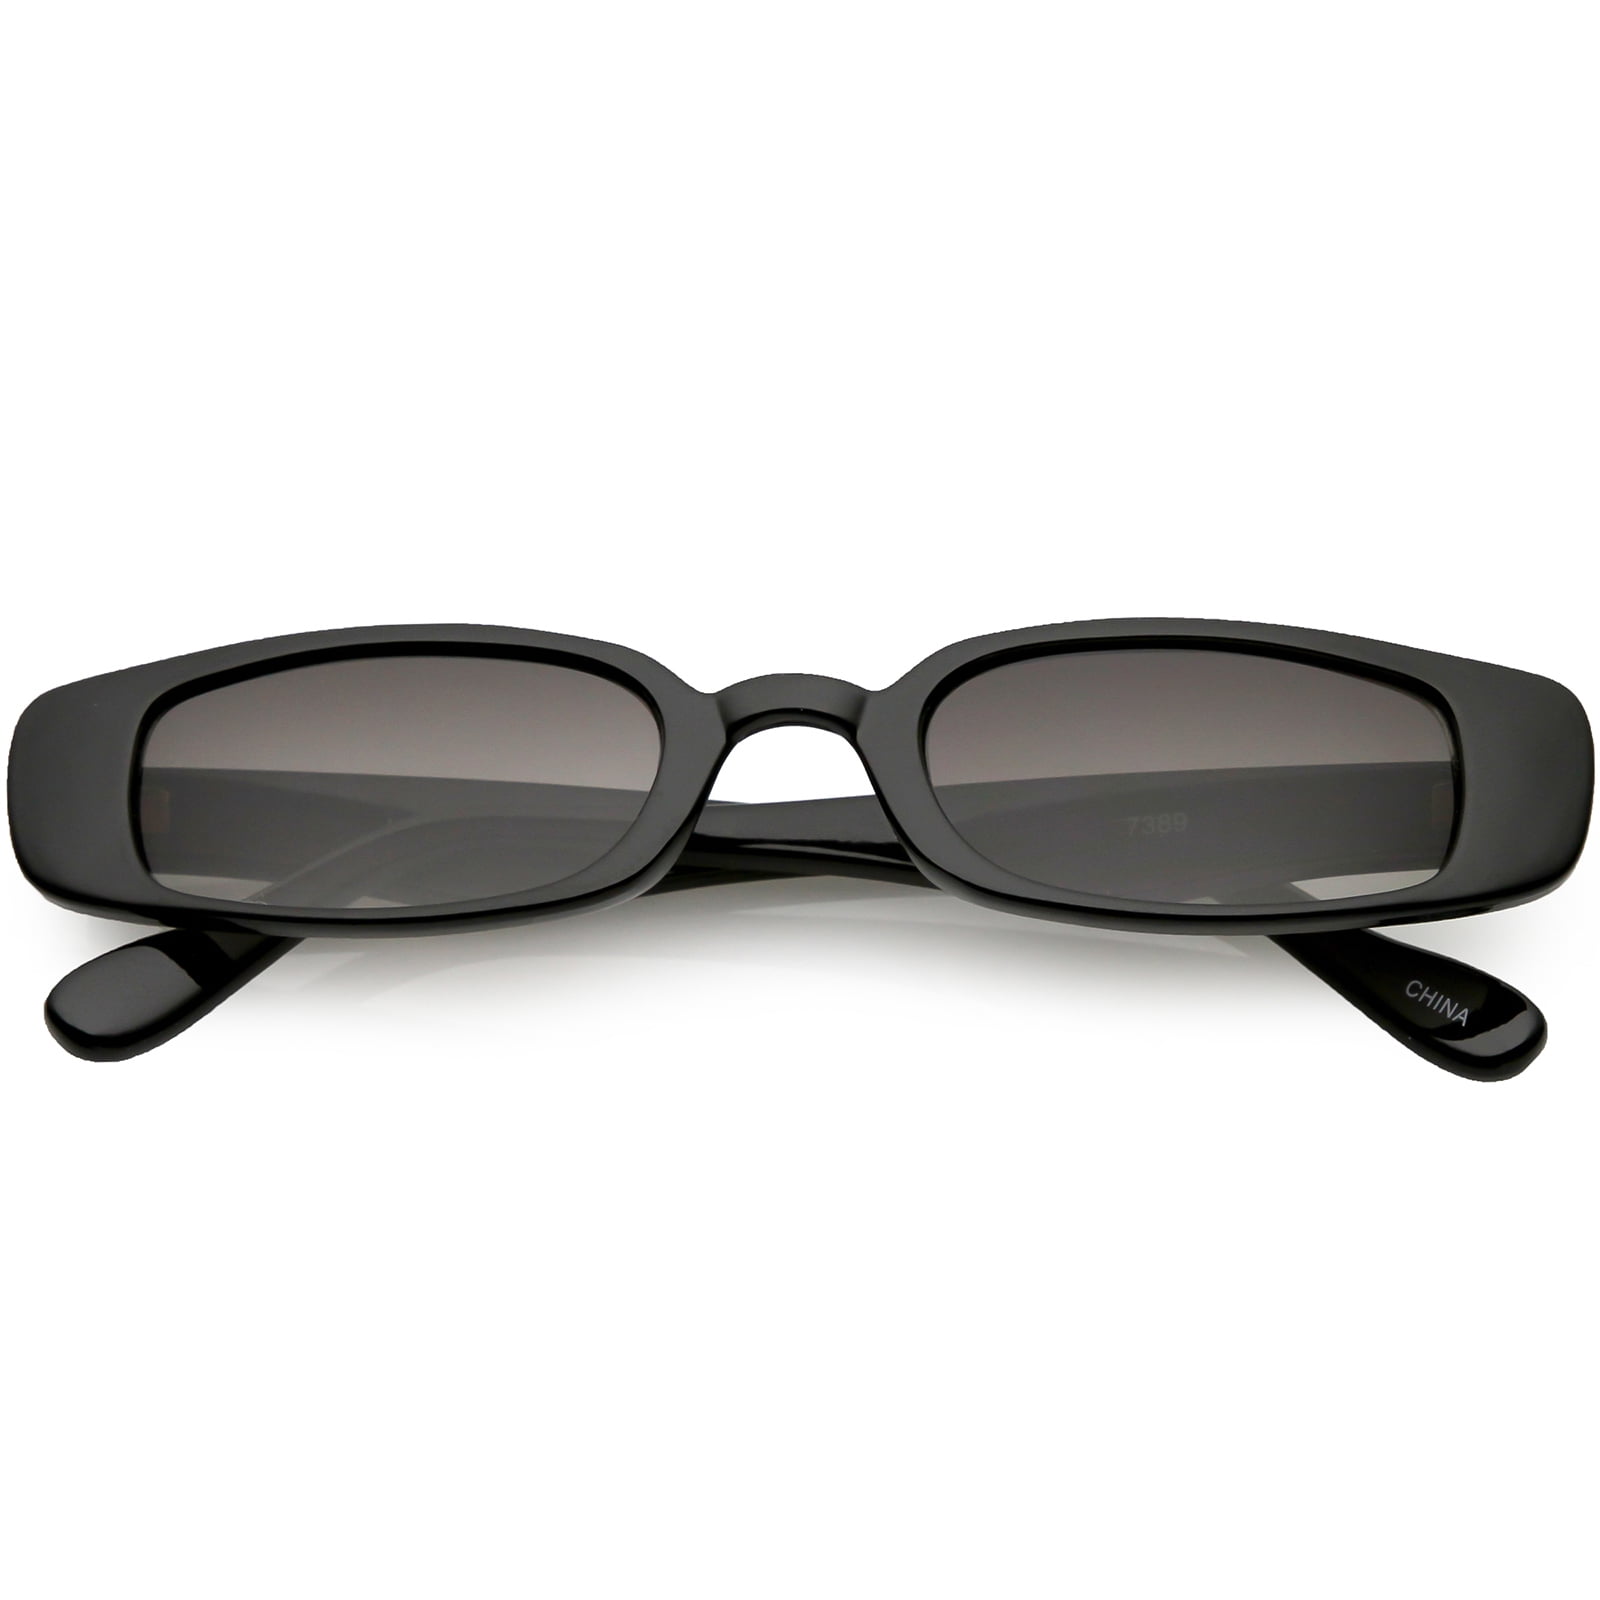 Dark Slim Stylish Sunglasses Polycarbonate Lenses 